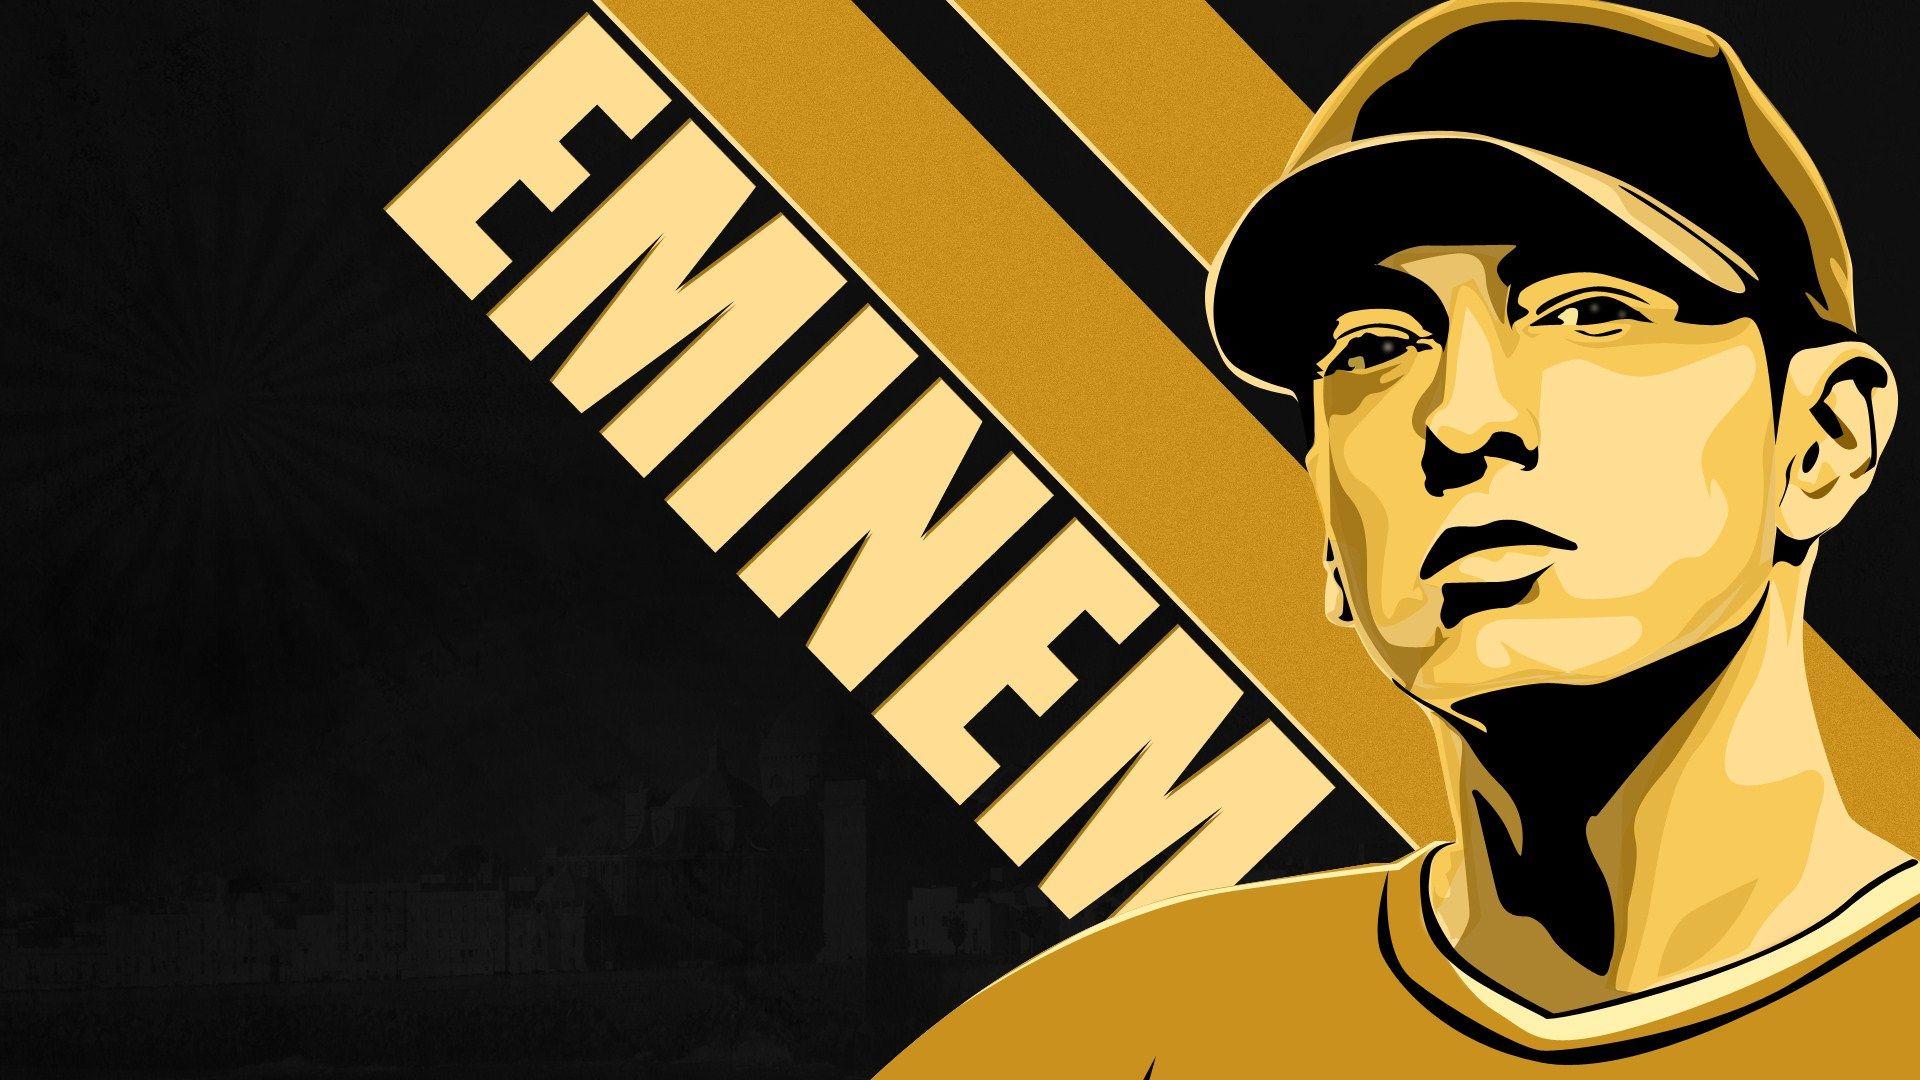 Eminem Wallpaper HD 2015